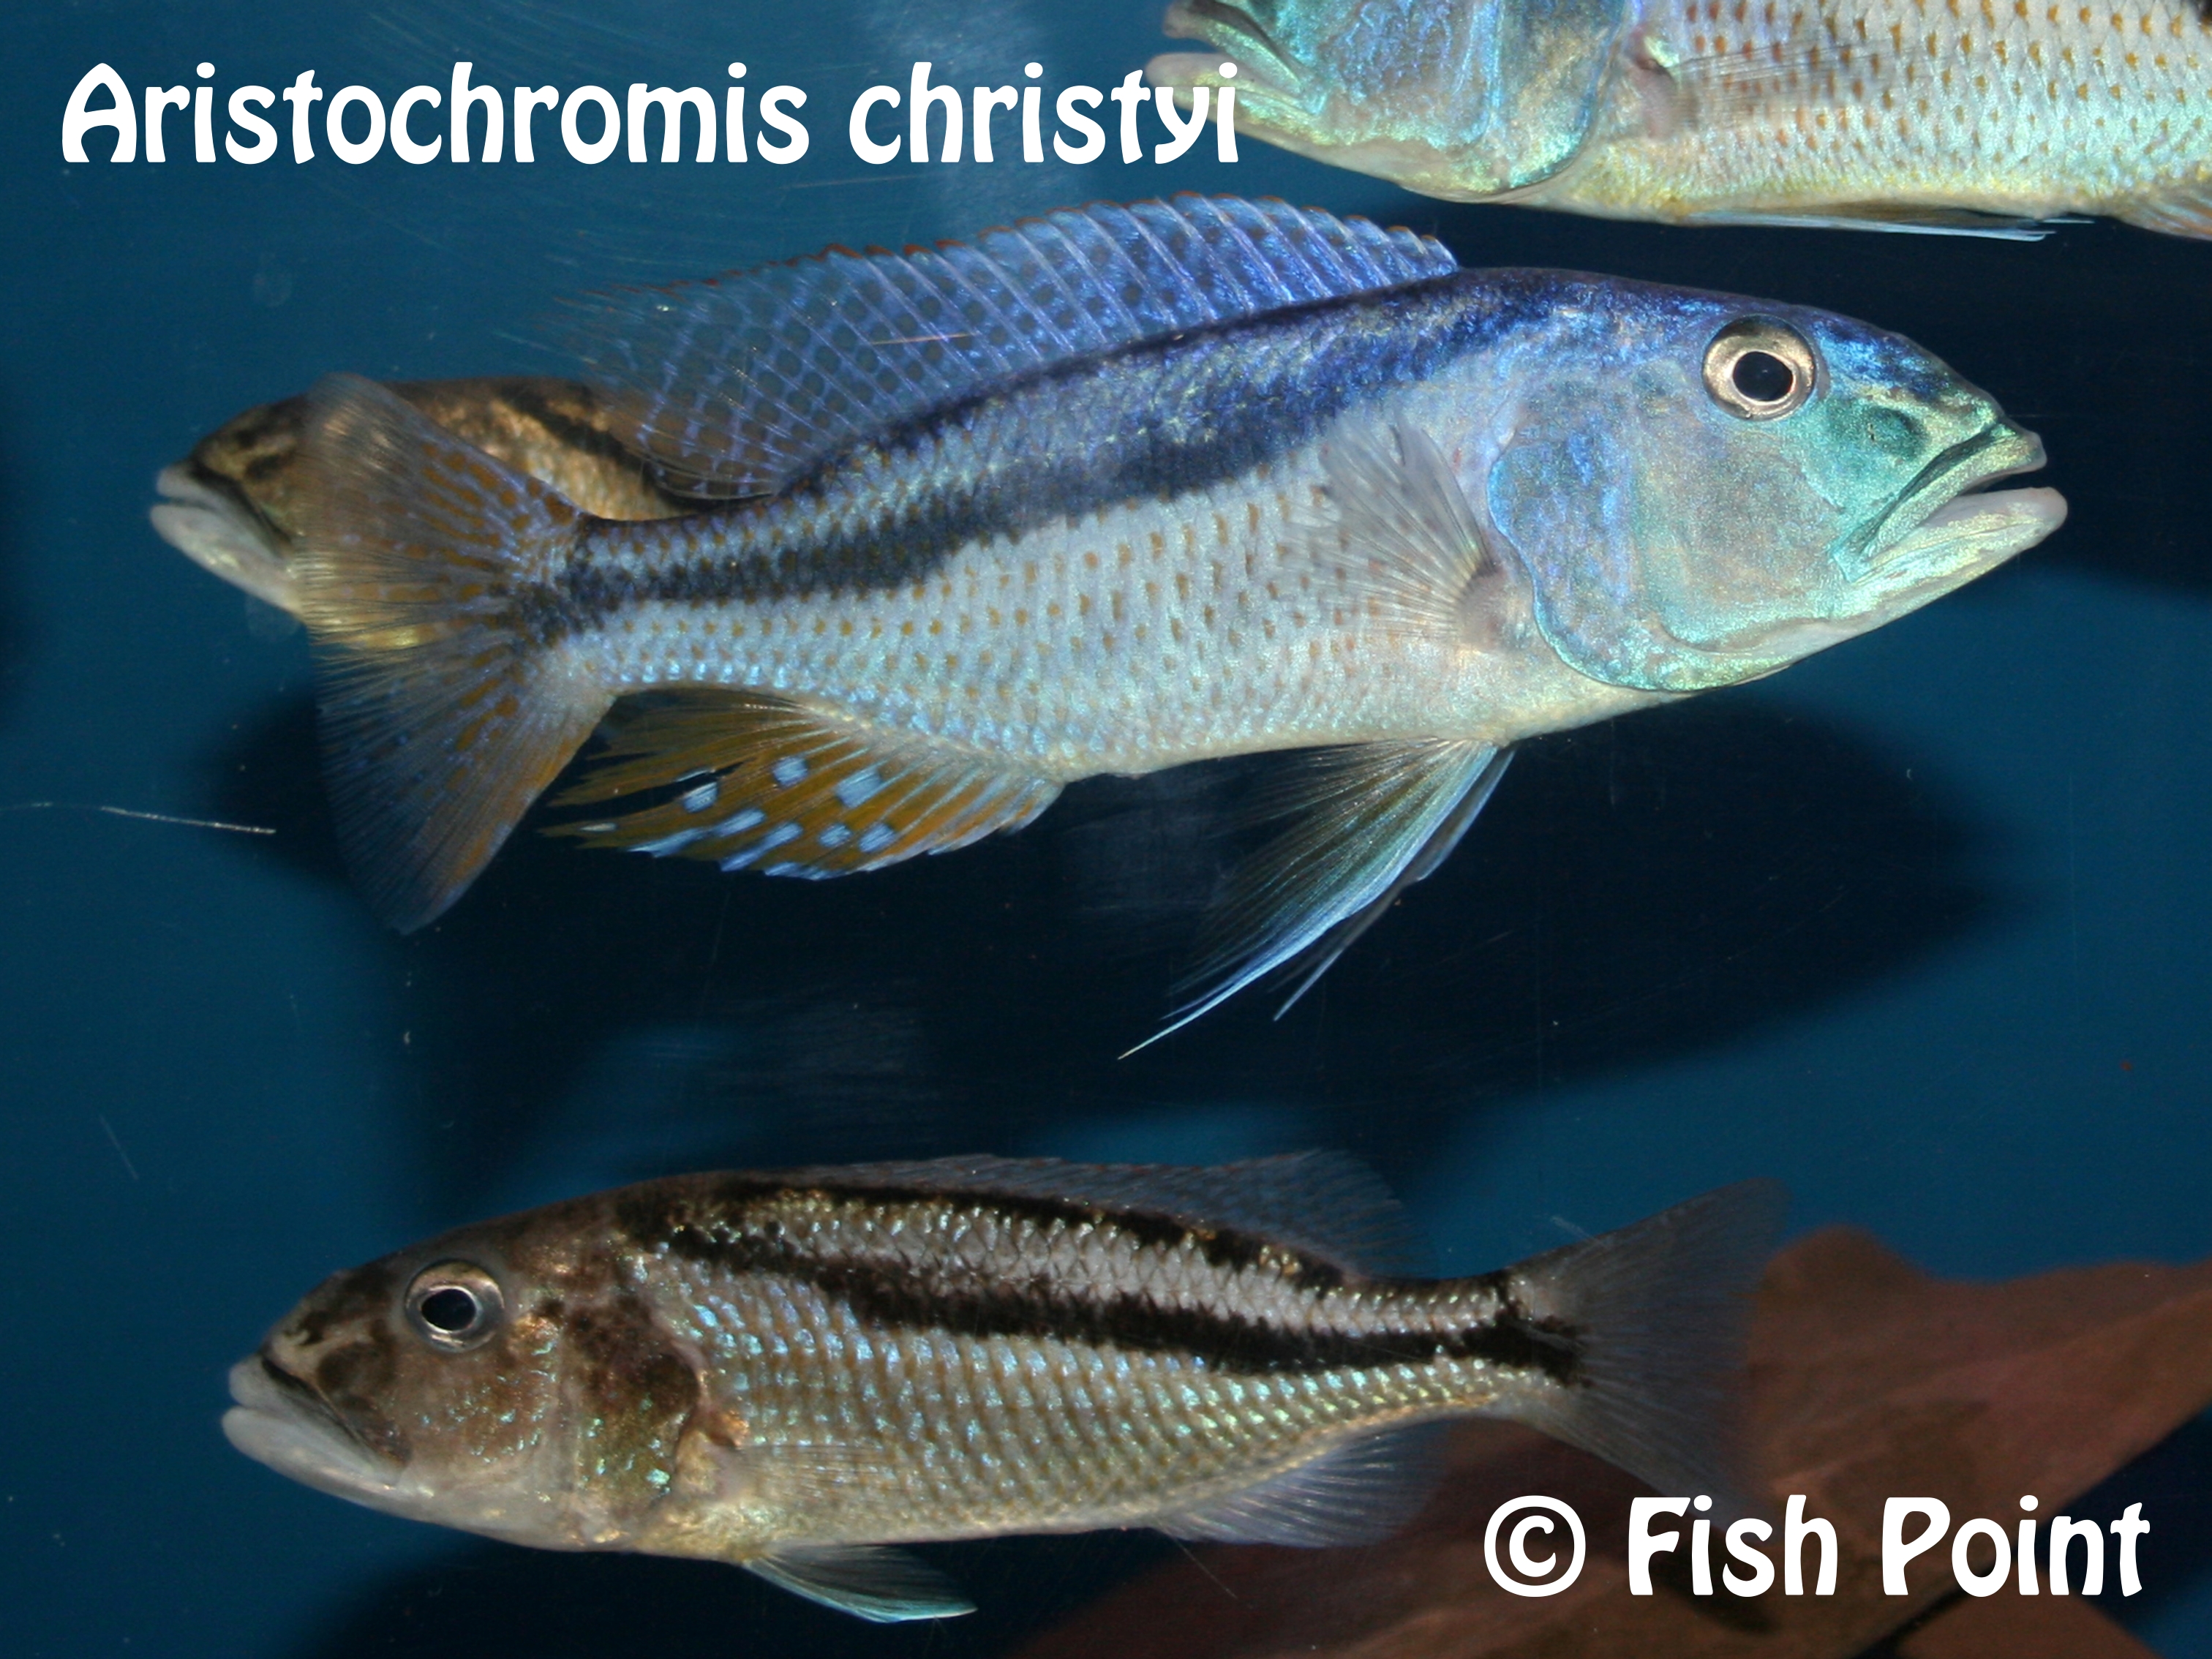 Aristochromis christyi